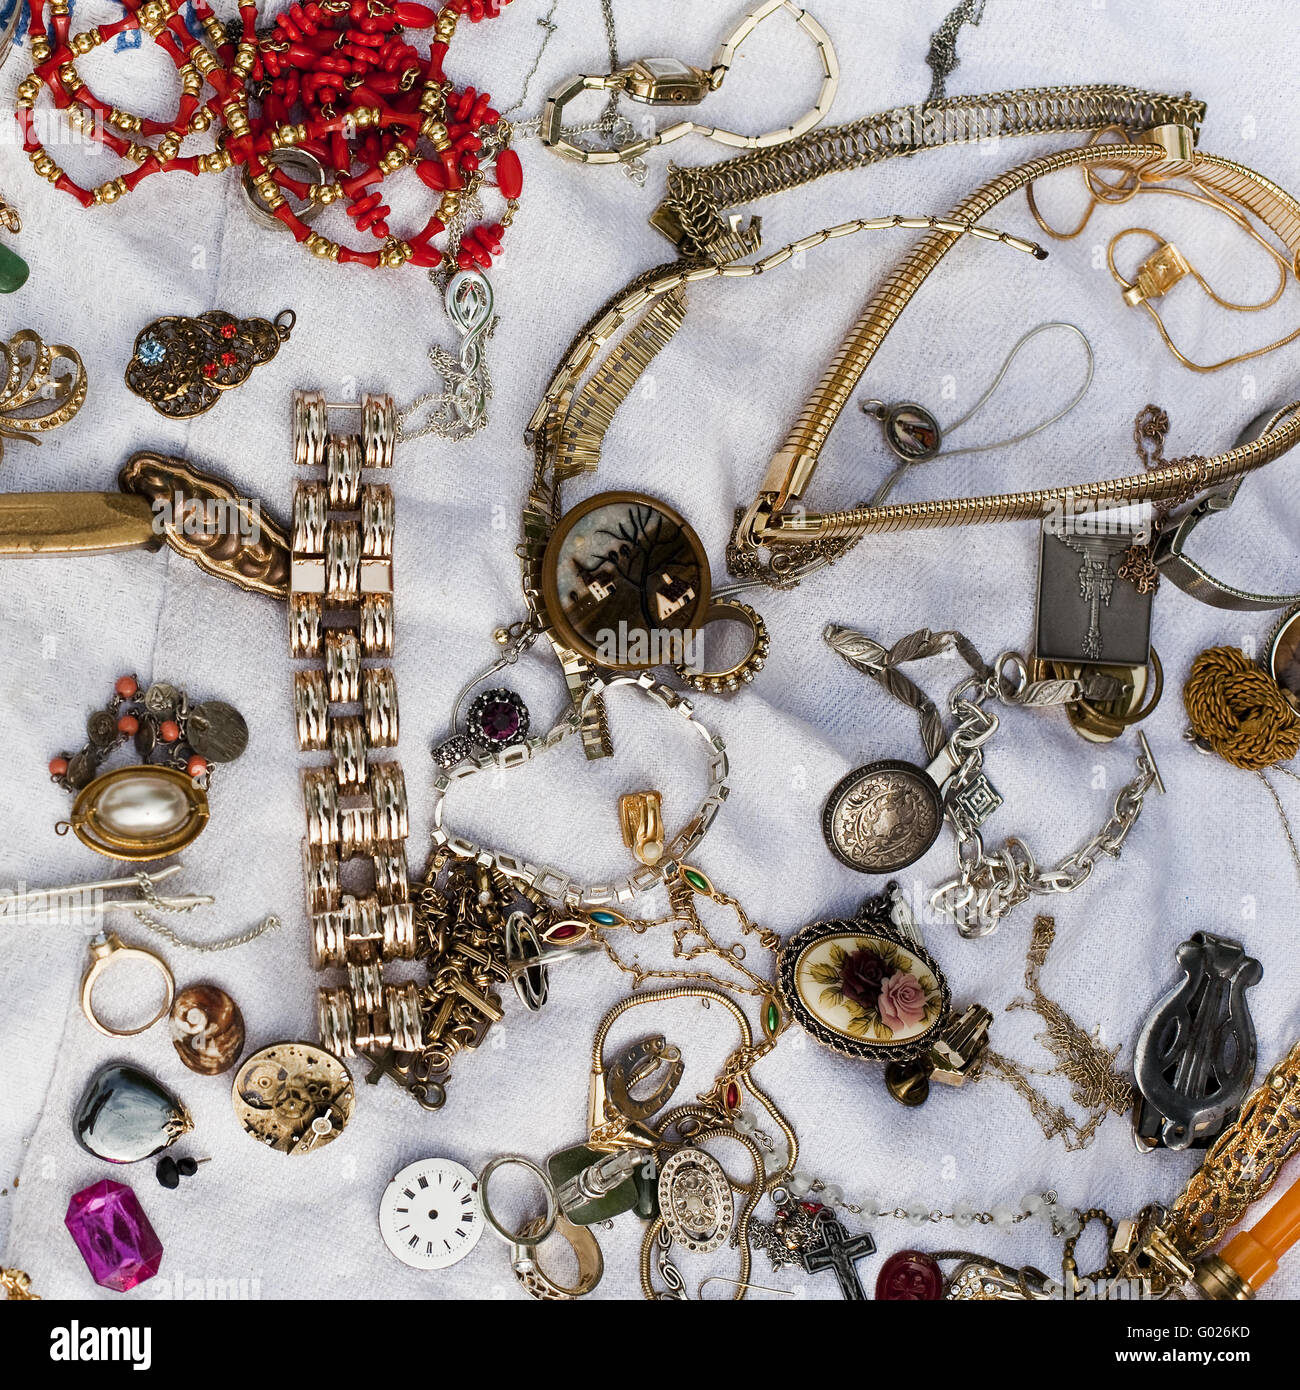 jewellery on a flea market Stock Photo